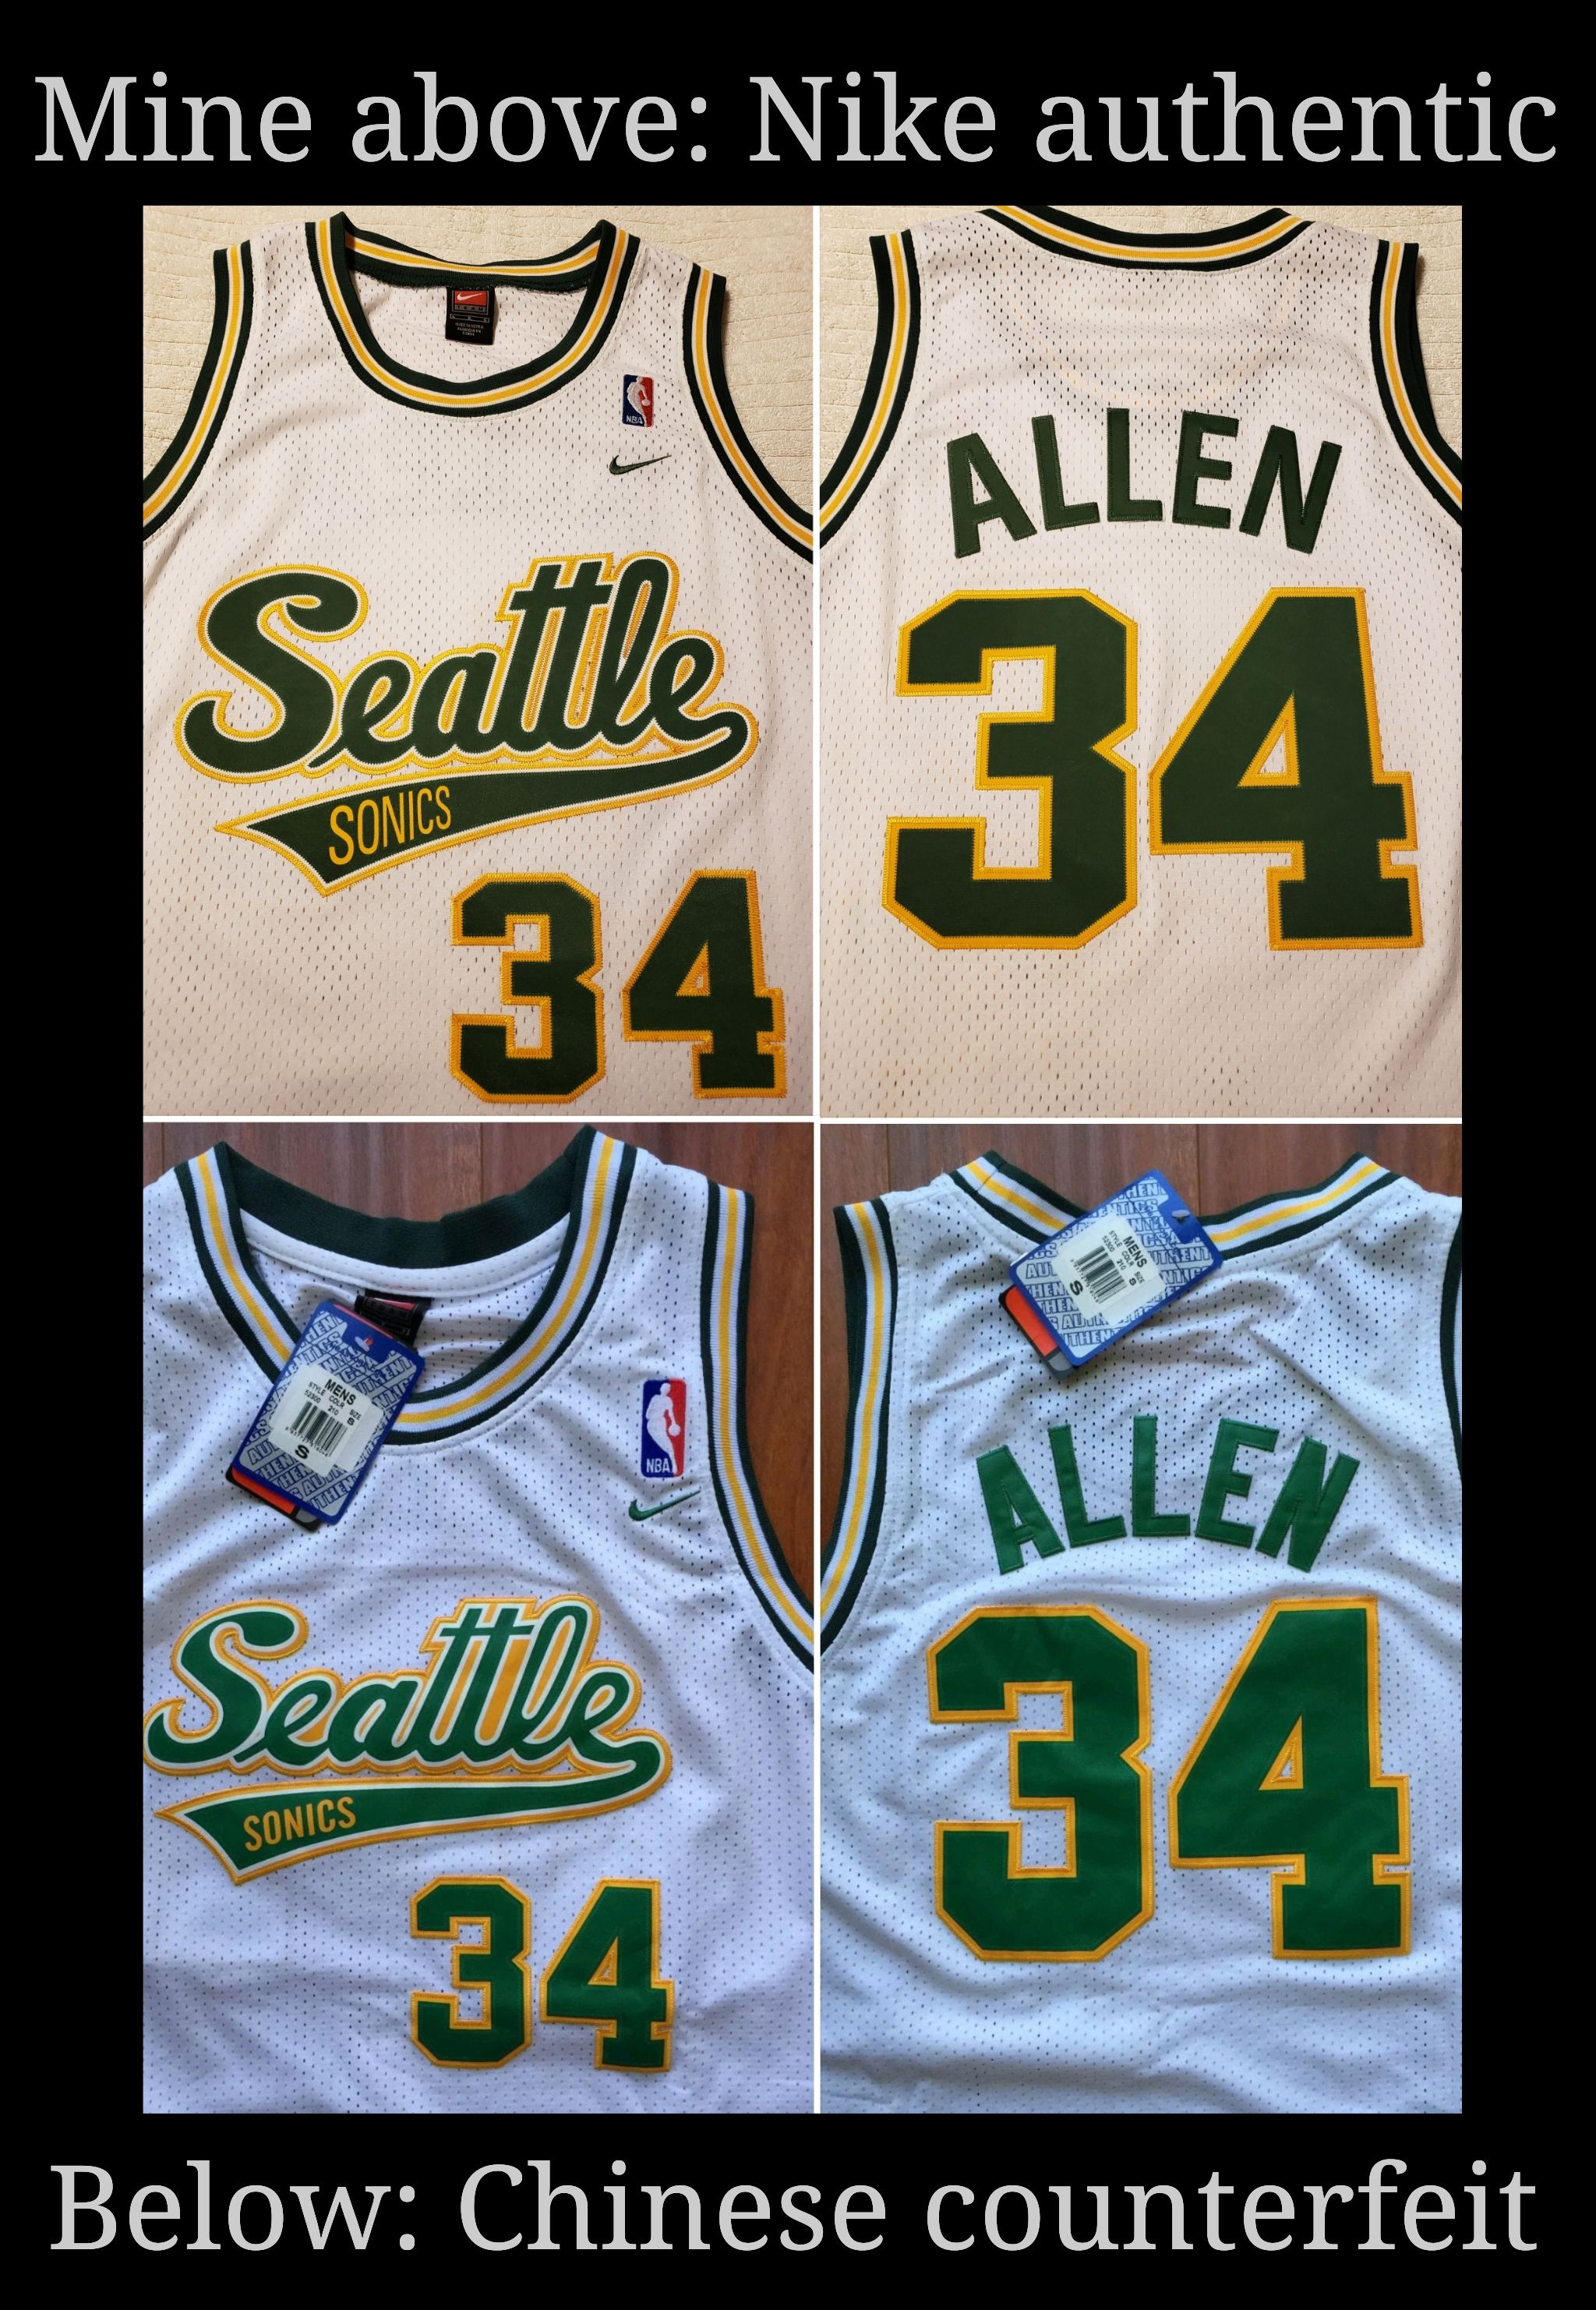 Boston Celtics Jersey Ray Allen Size L Men Adult for Sale in San Diego, CA  - OfferUp